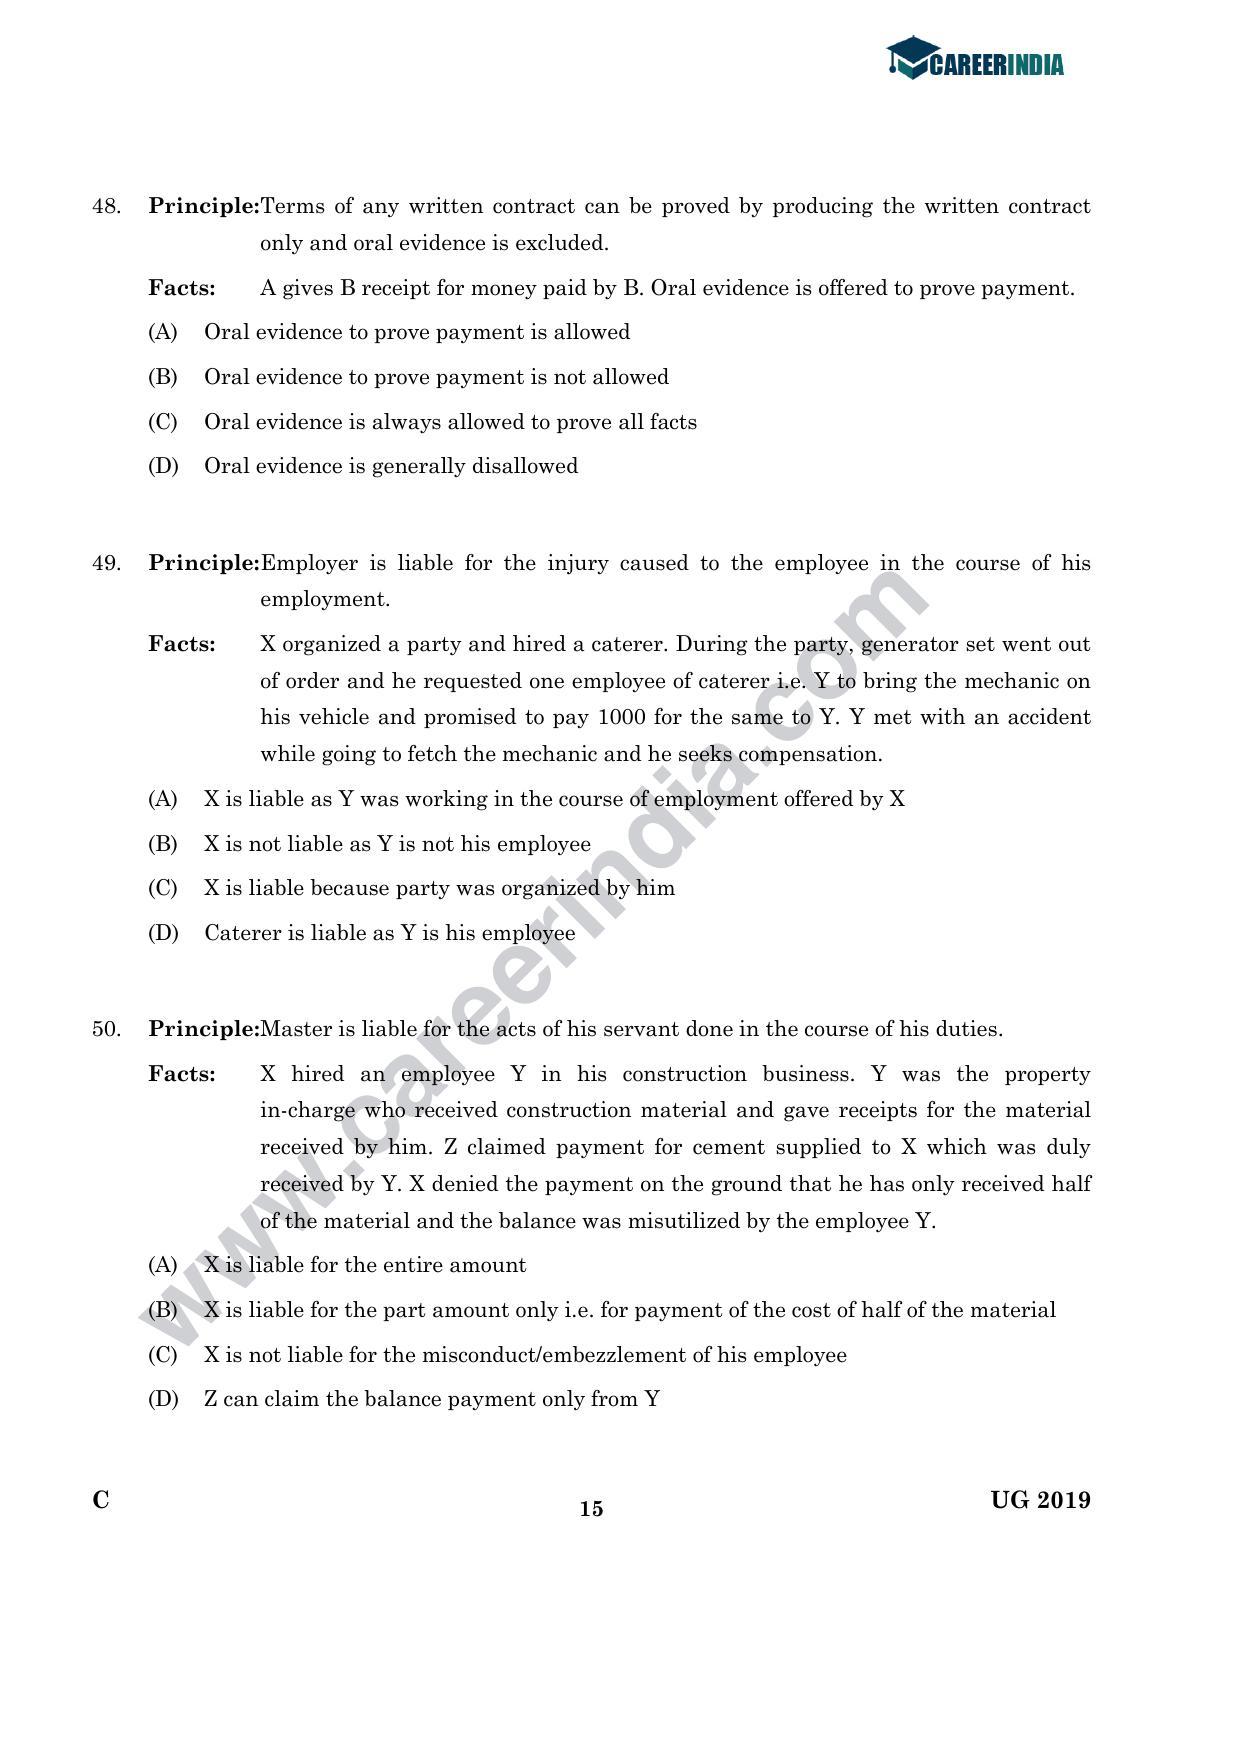 CLAT 2019 UG Legal-Aptitude Question Paper - Page 14